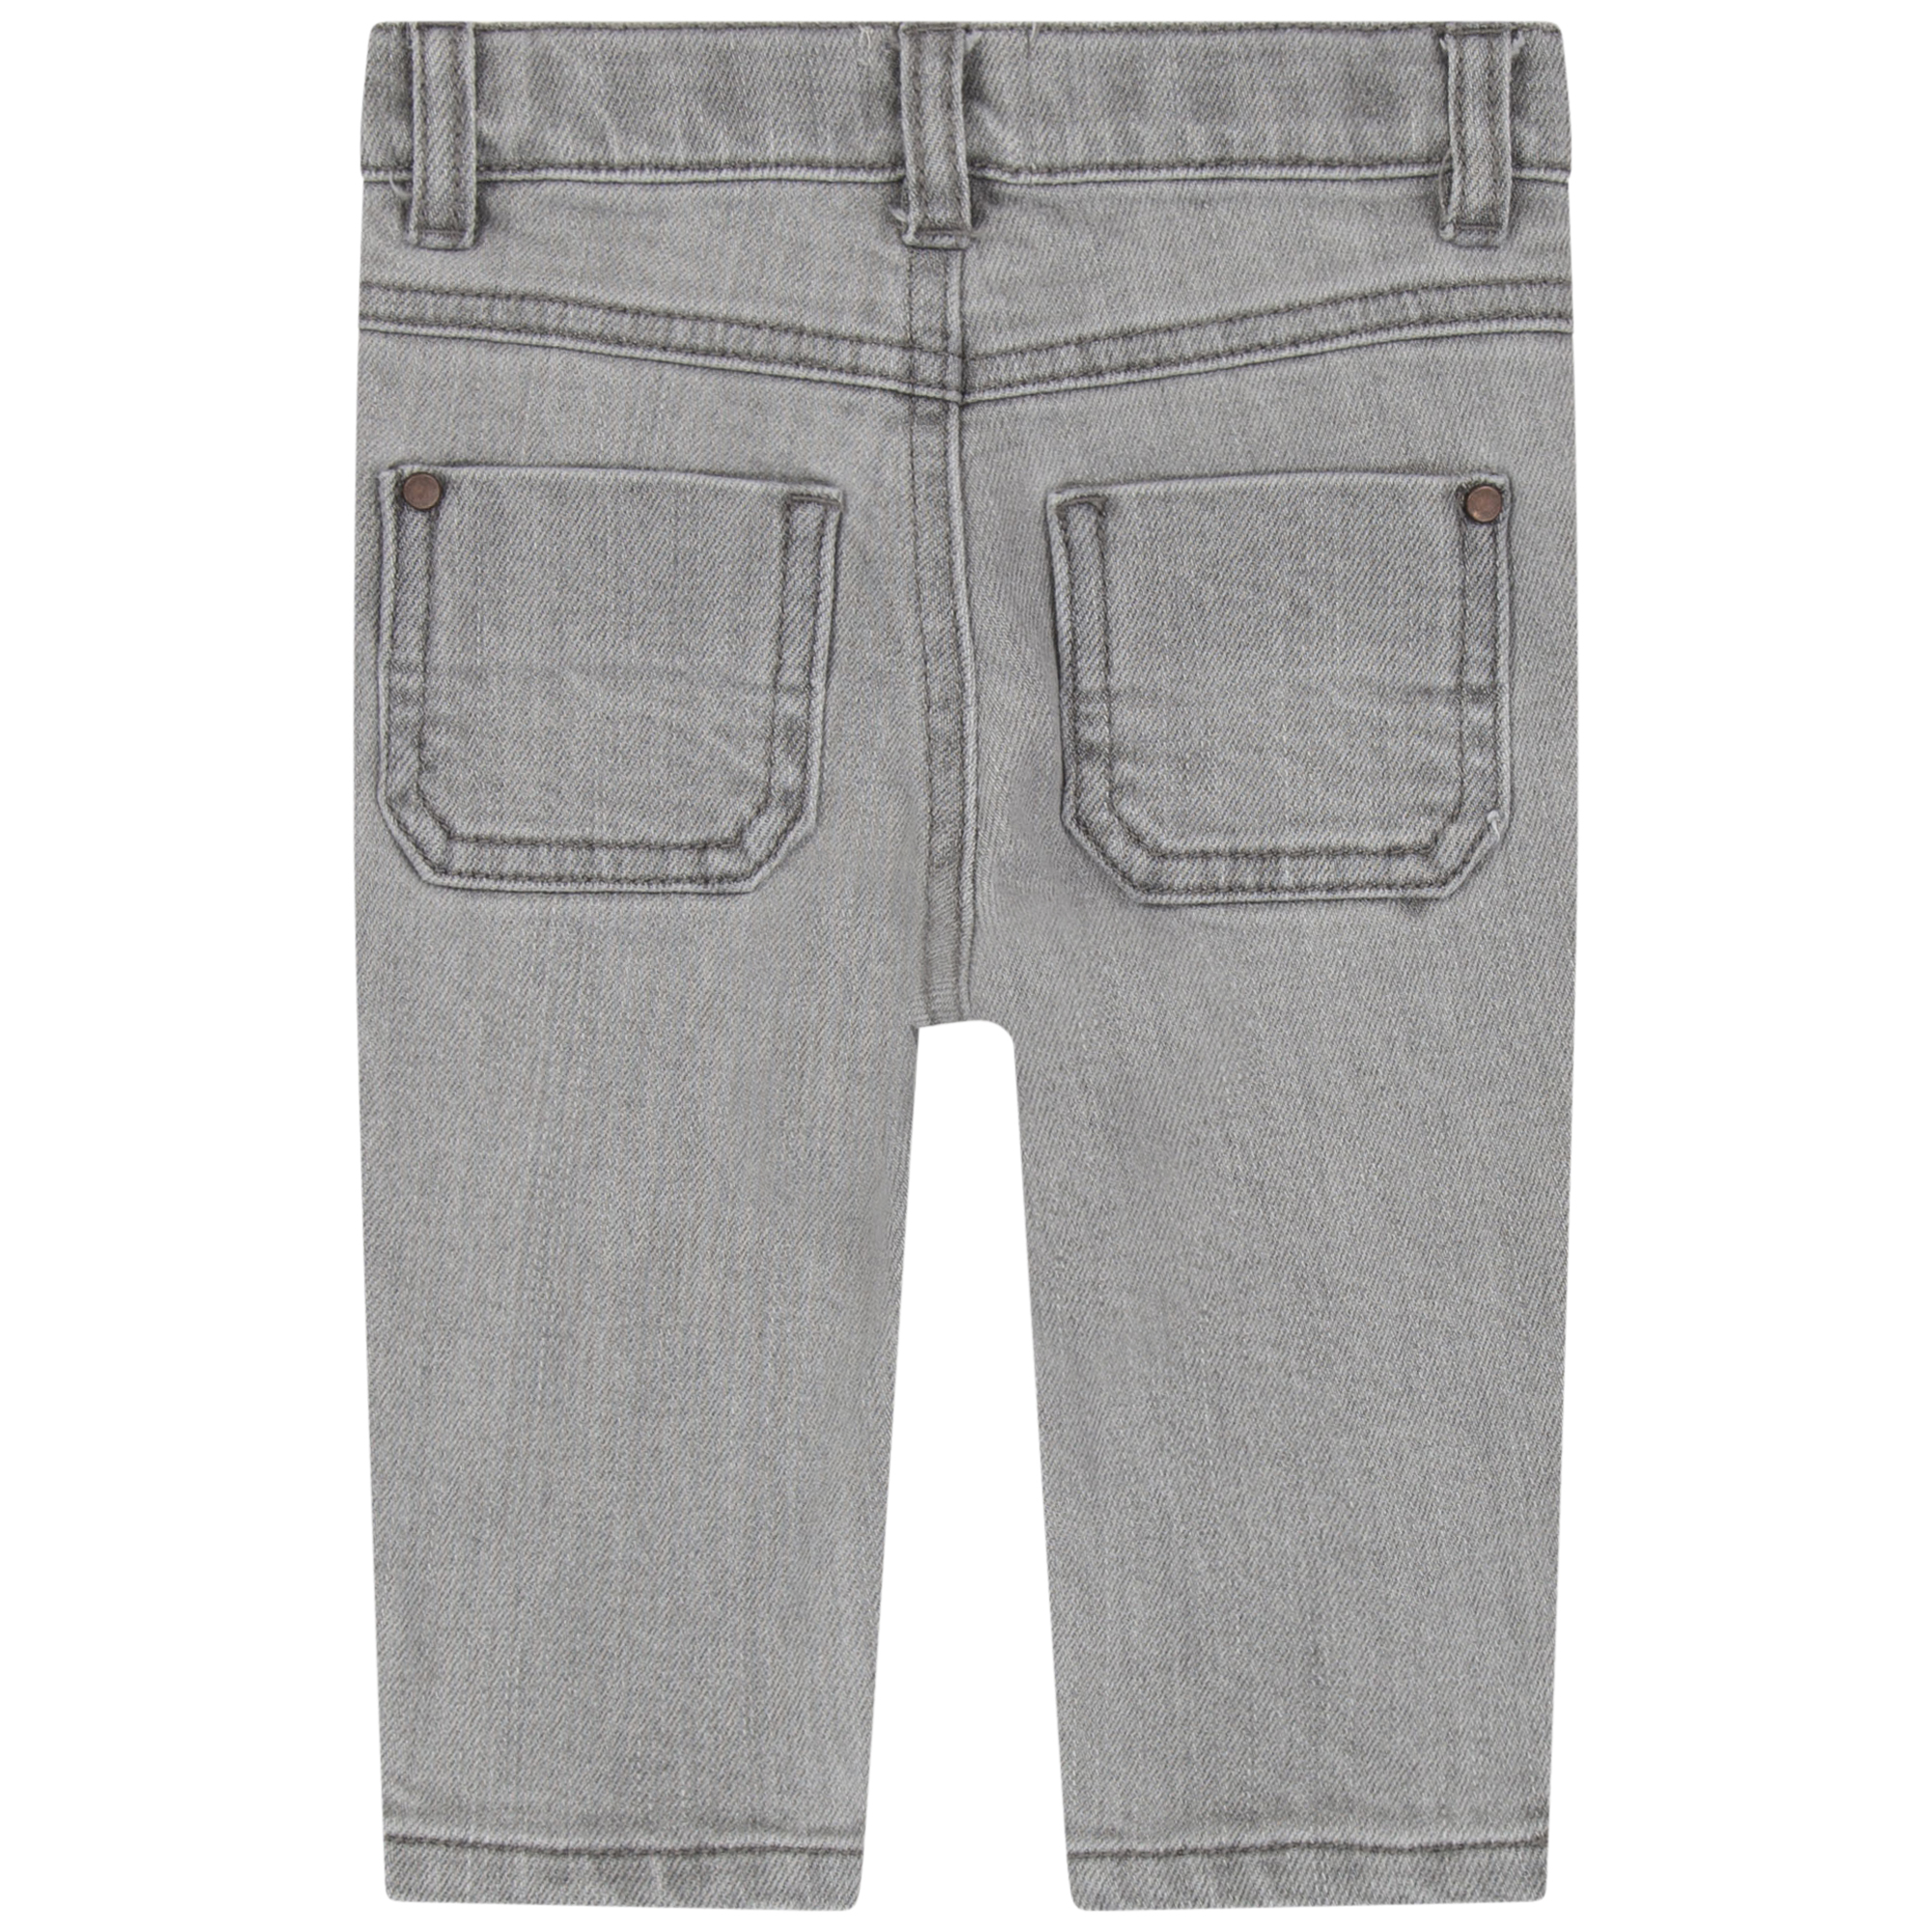 Riveted cotton 5-pocket jeans CARREMENT BEAU for BOY